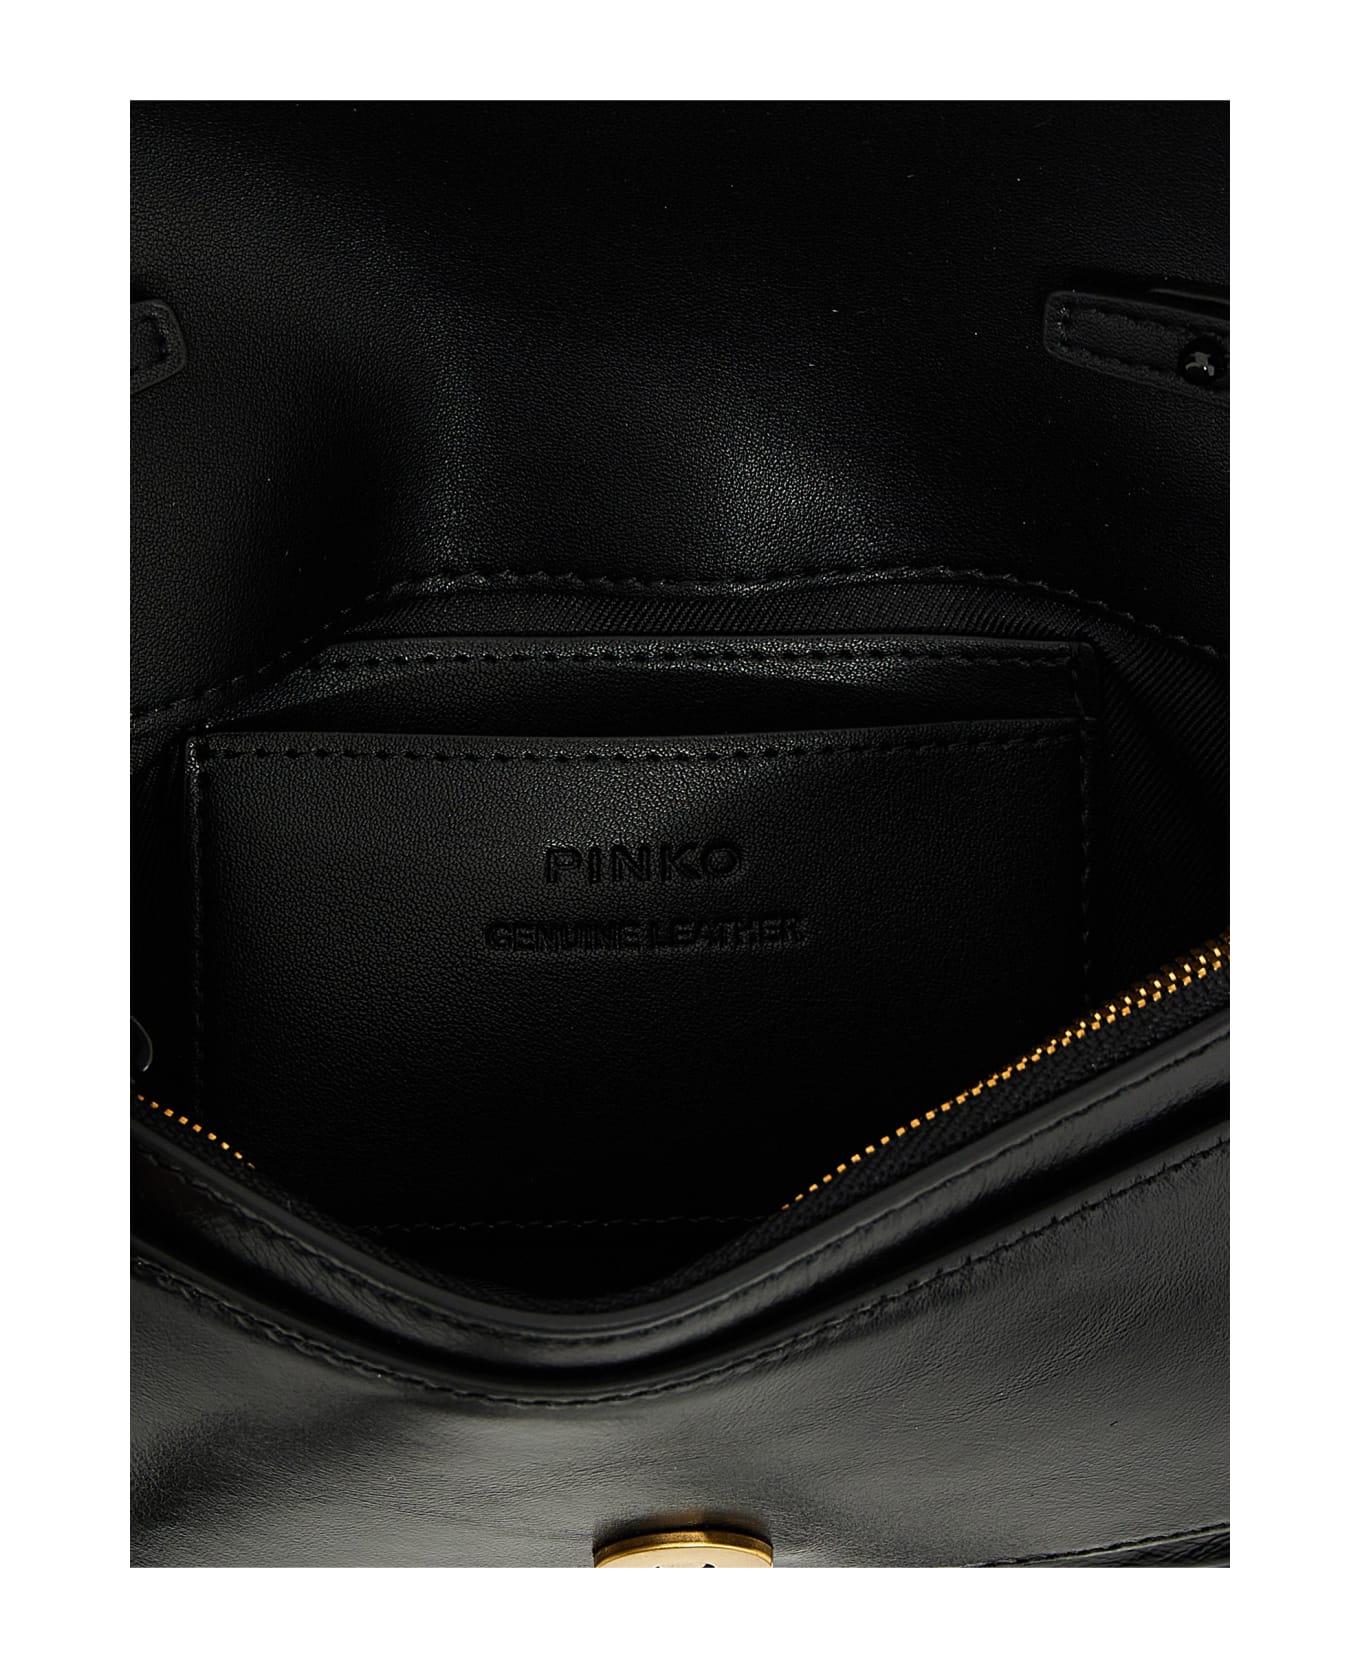 Pinko 'love One Pocket' Crossbody Bag - Black  